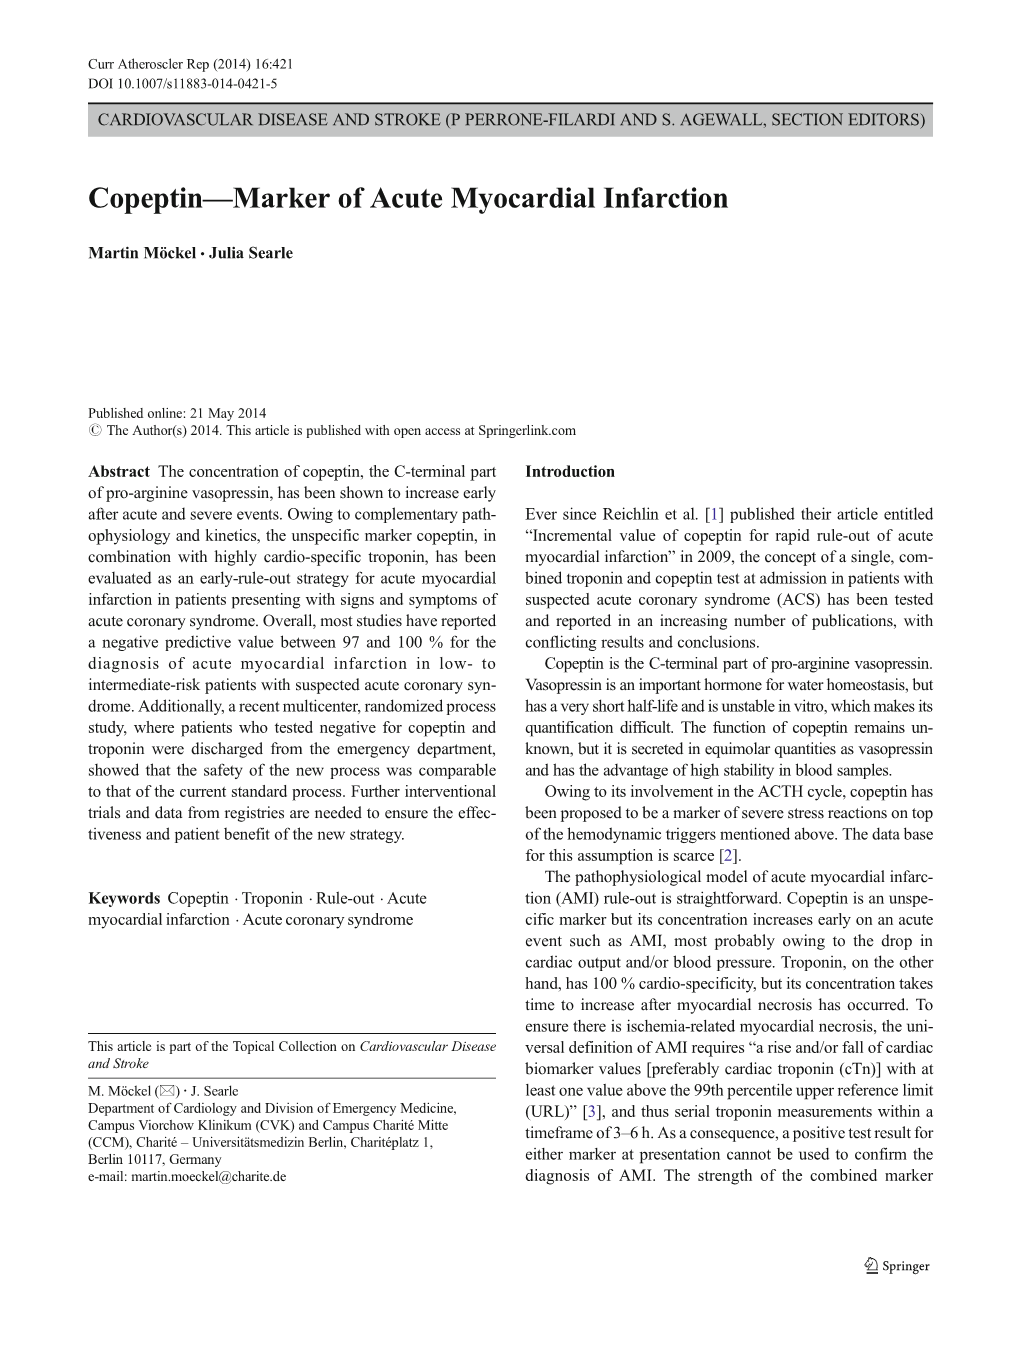 Copeptin—Marker of Acute Myocardial Infarction